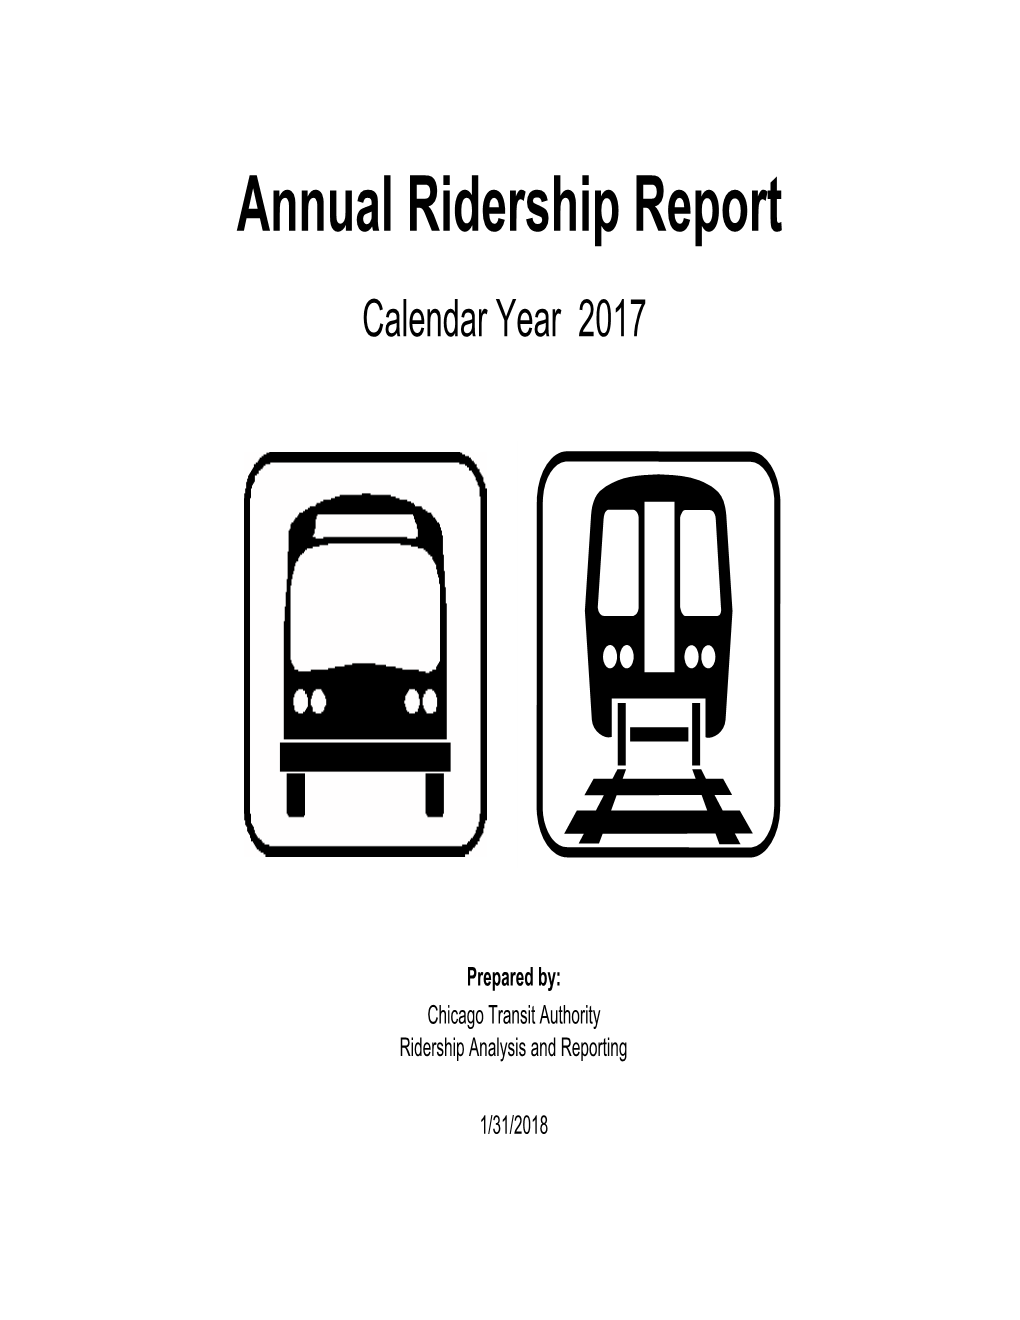 Annual Ridership Report Calendar Year 2017